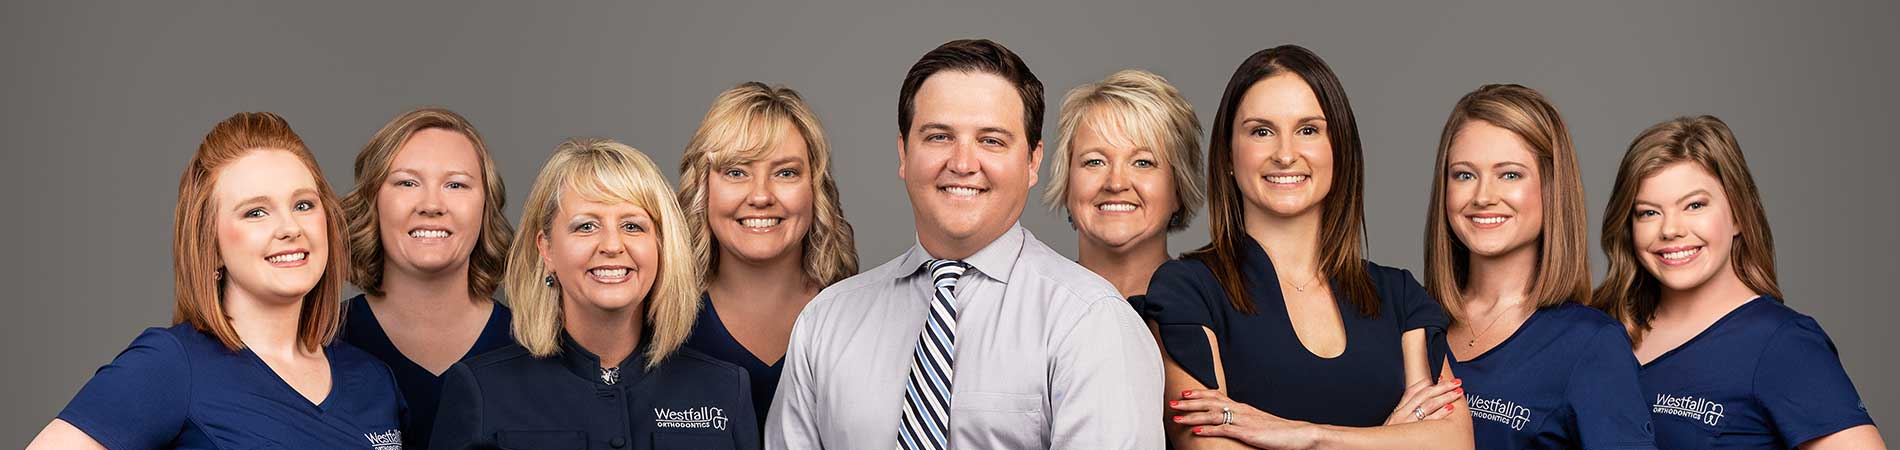 Westfall Orthodontics team photo